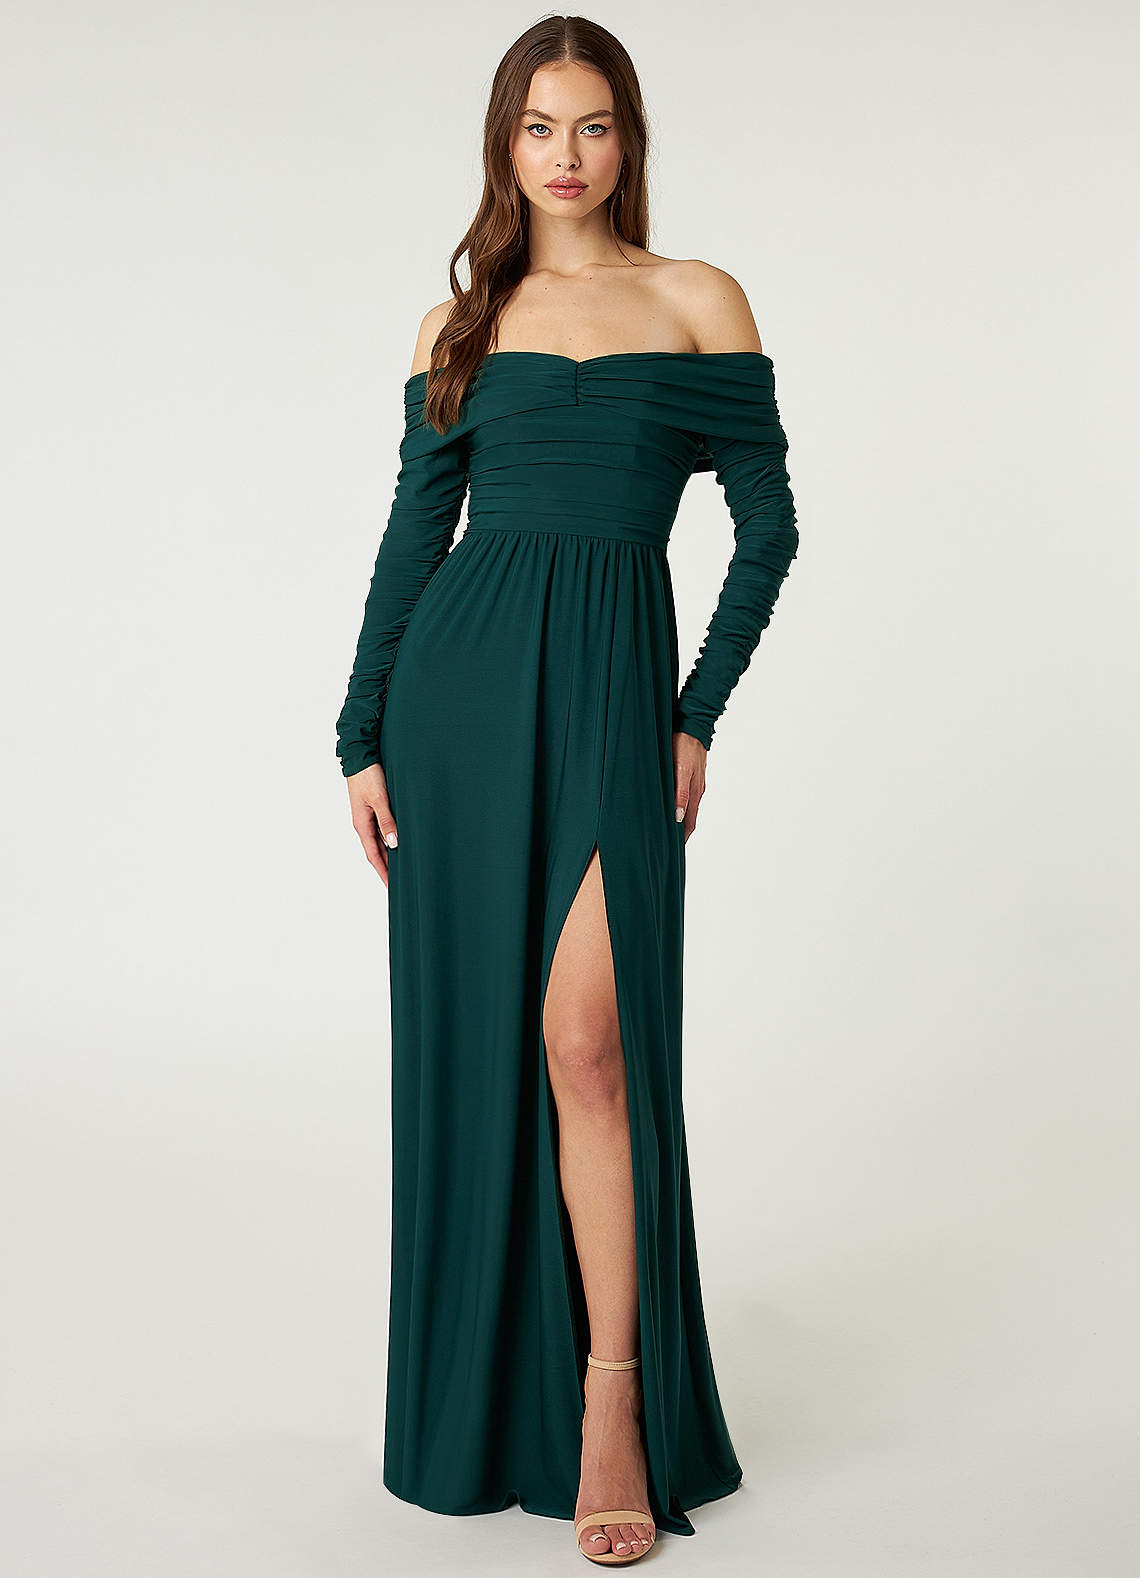 Azazie Logan Bridesmaid Dresses Sheath Off the Shoulder Luxe Knit Floor-Length Dress image1